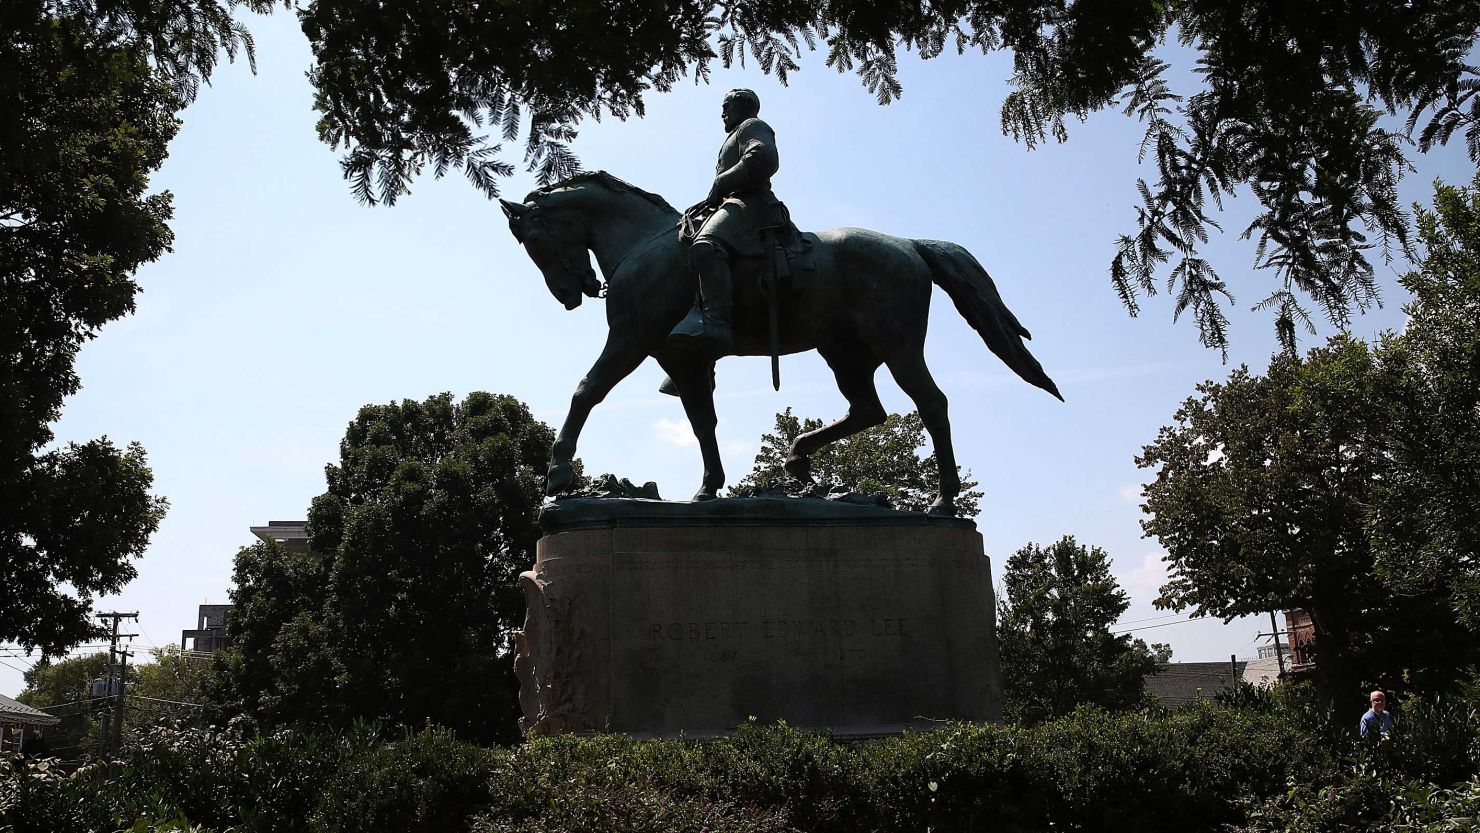 The Robert E. Lee statue in Charlottesville, Virginia.